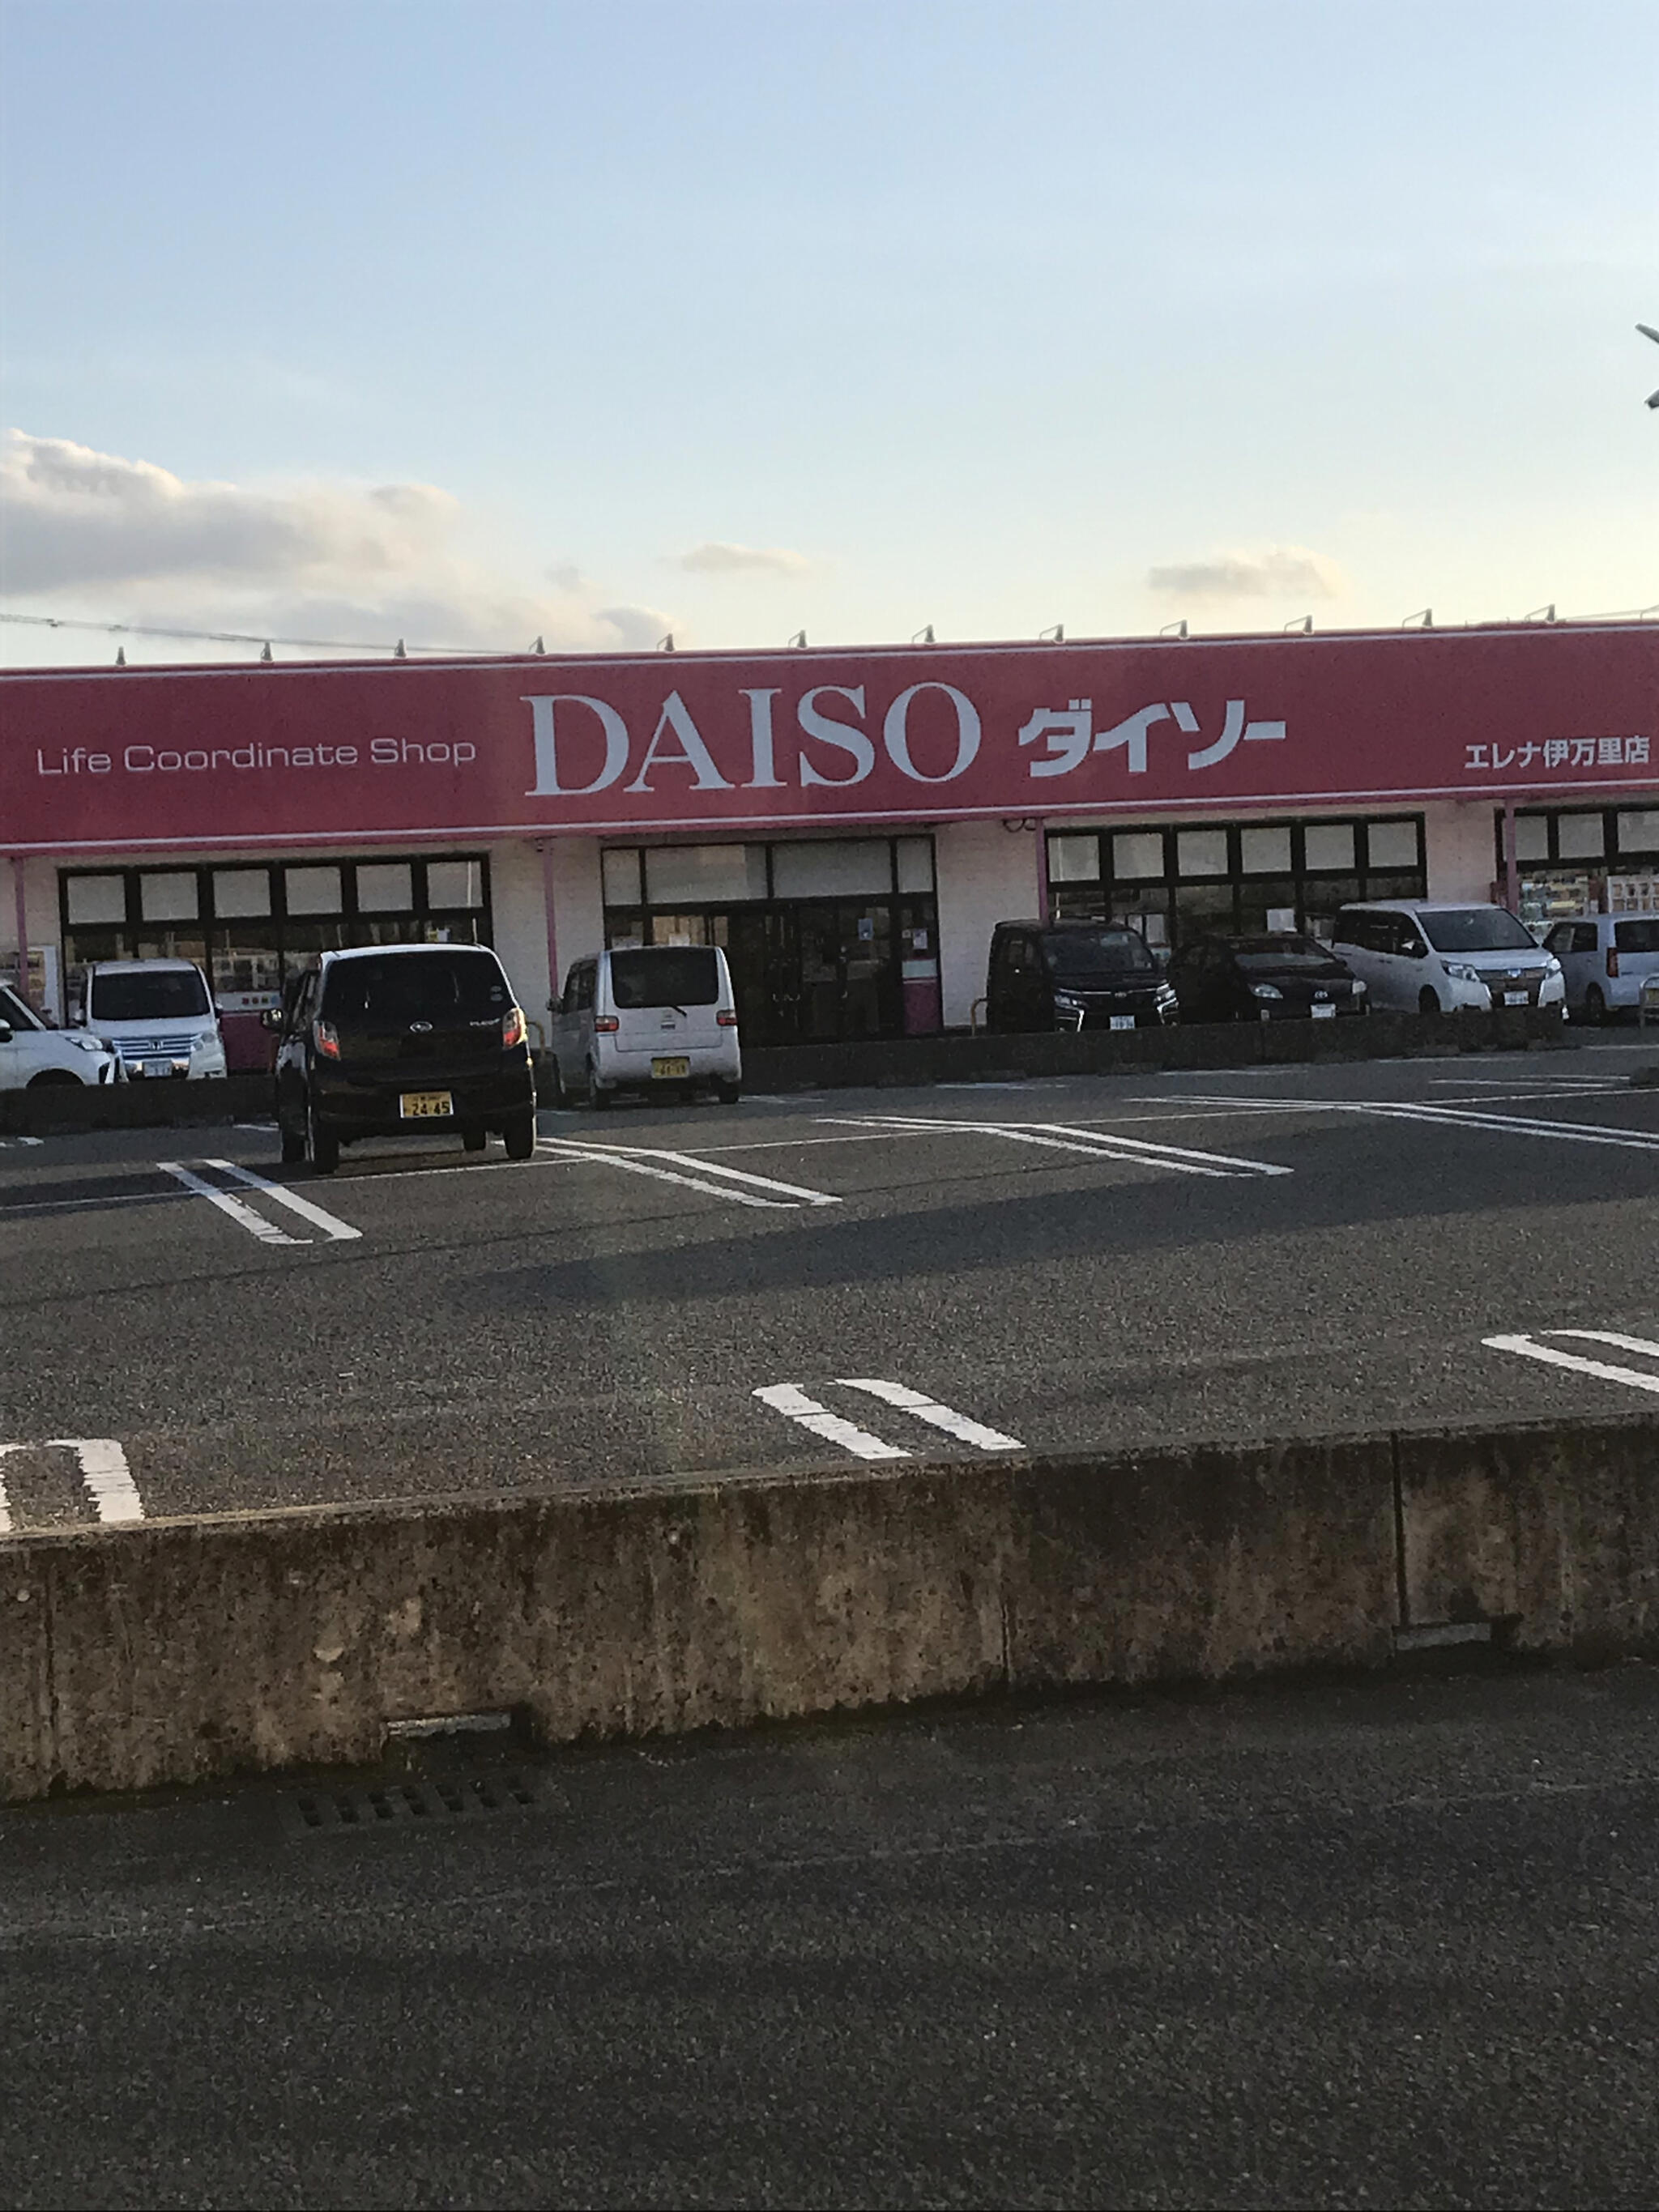 DAISO 伊万里店の代表写真1